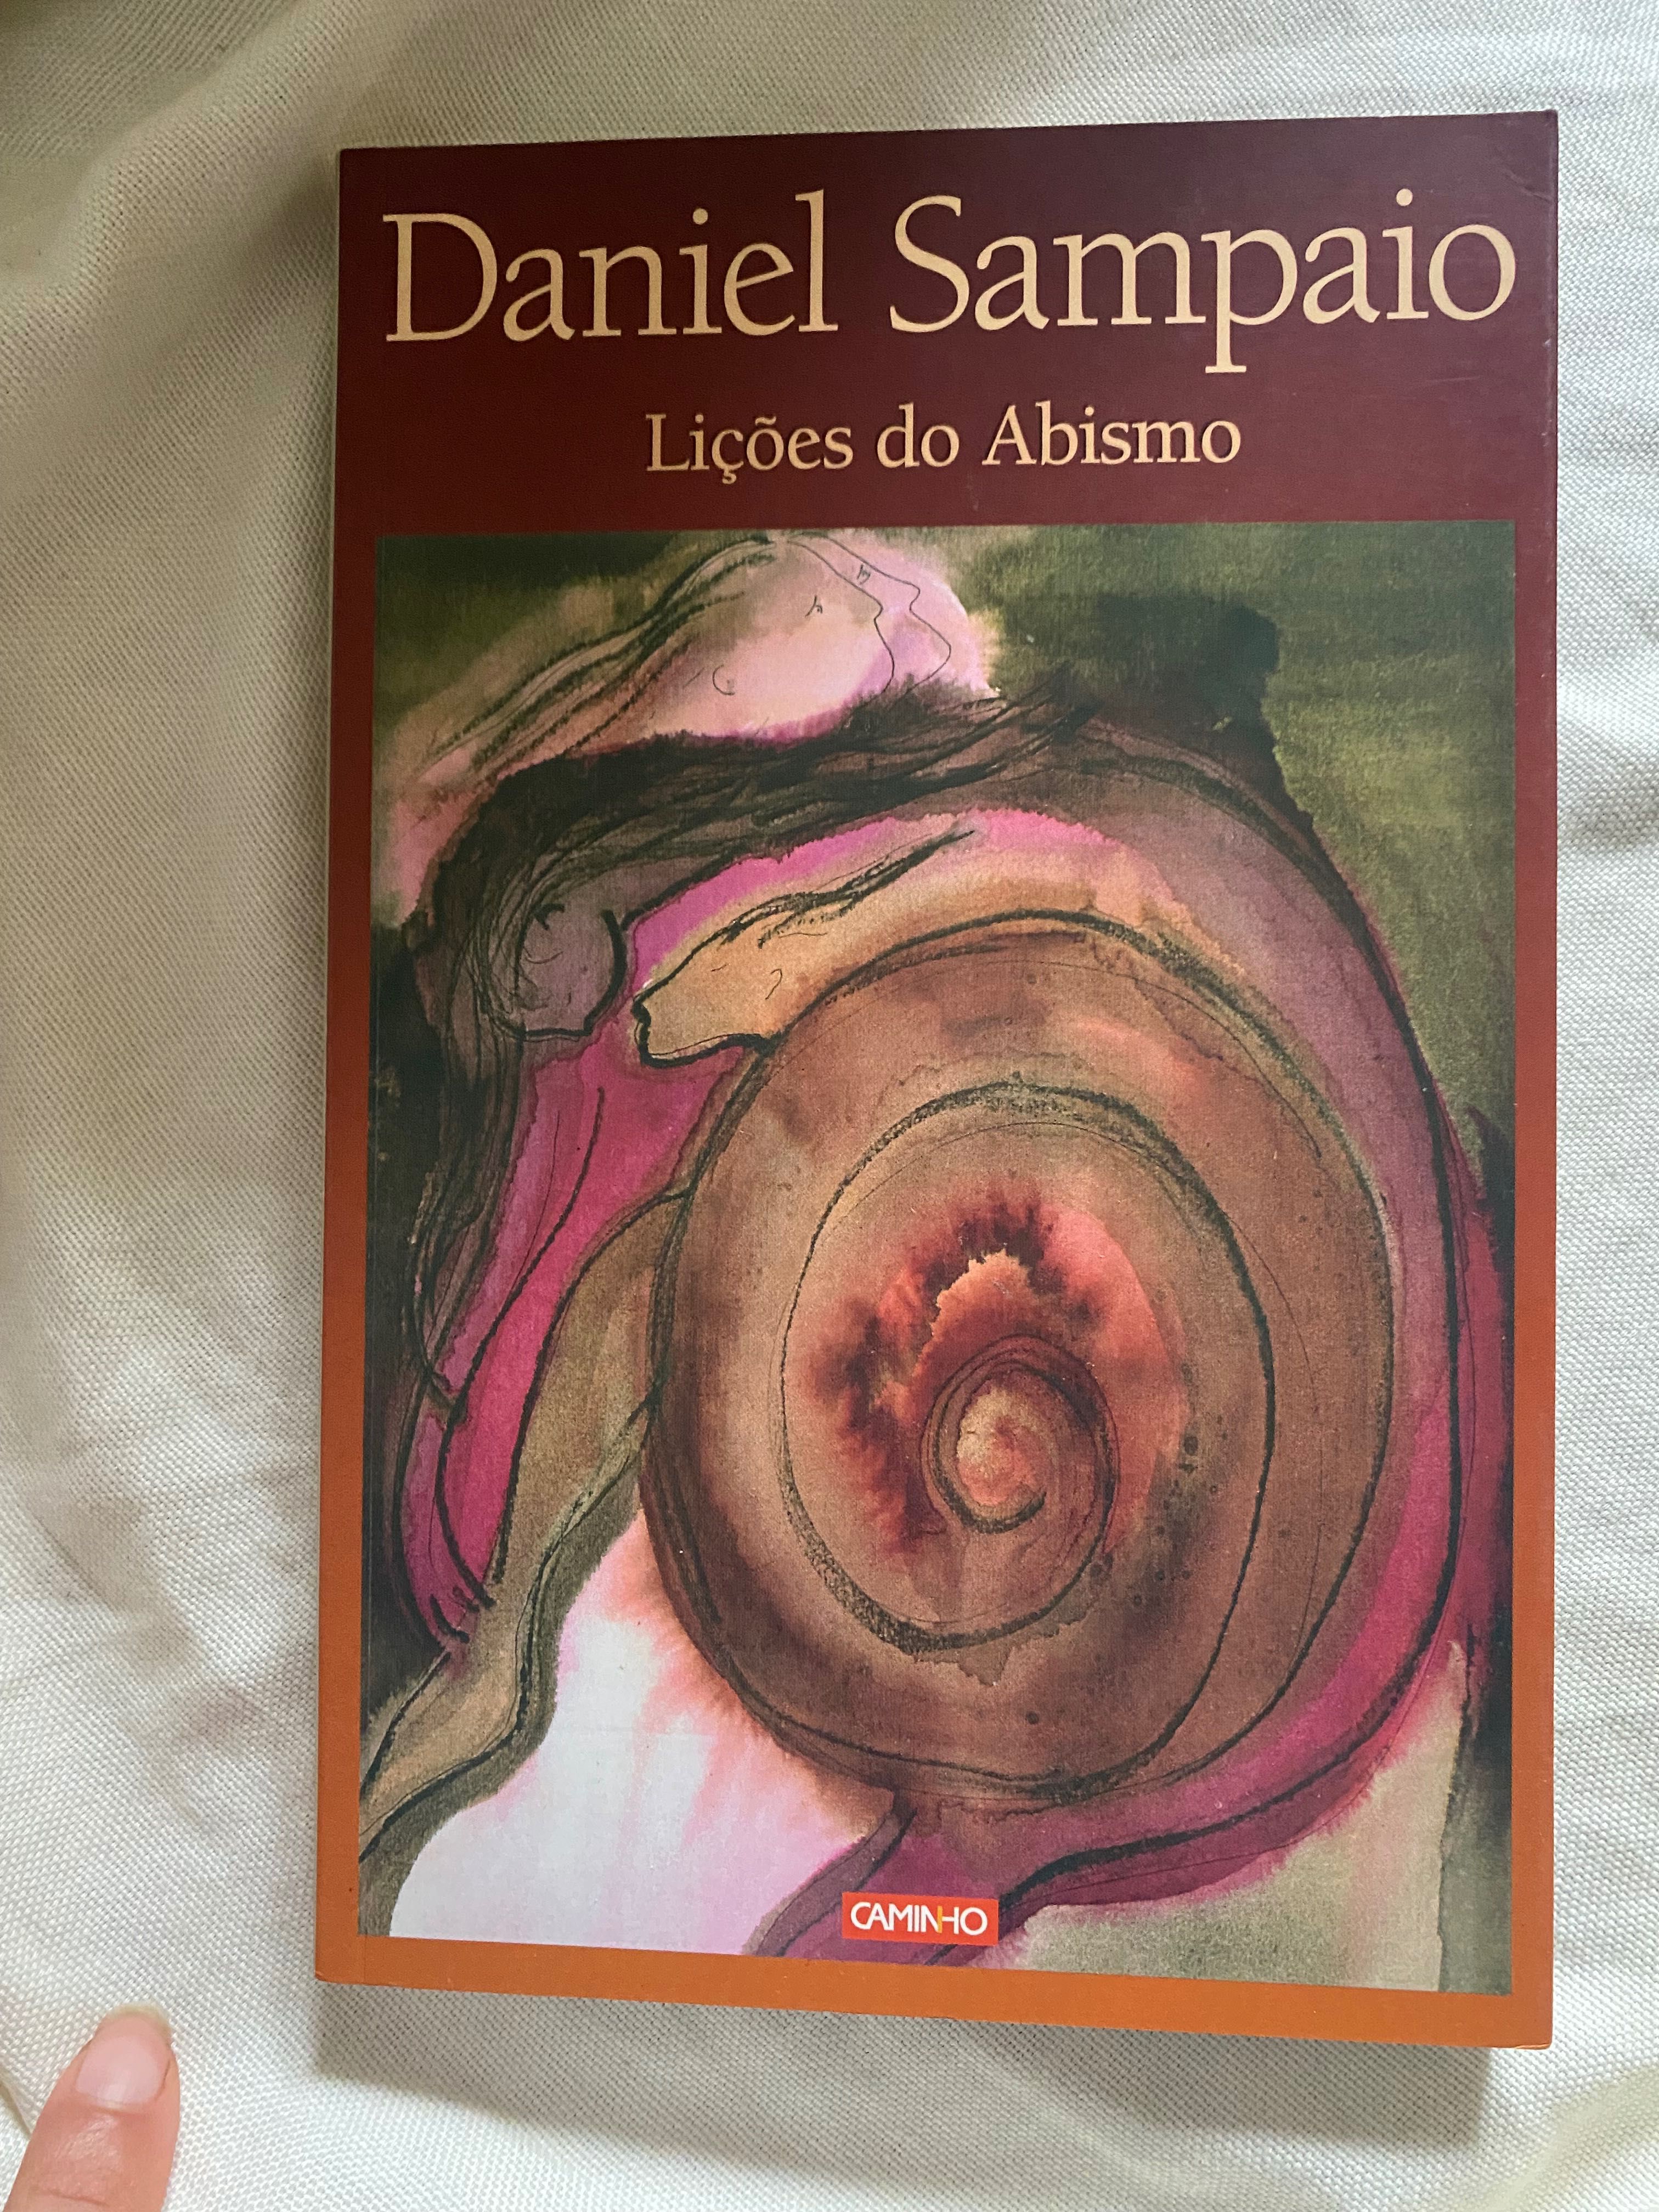 Daniel Sampaio - 3 livros